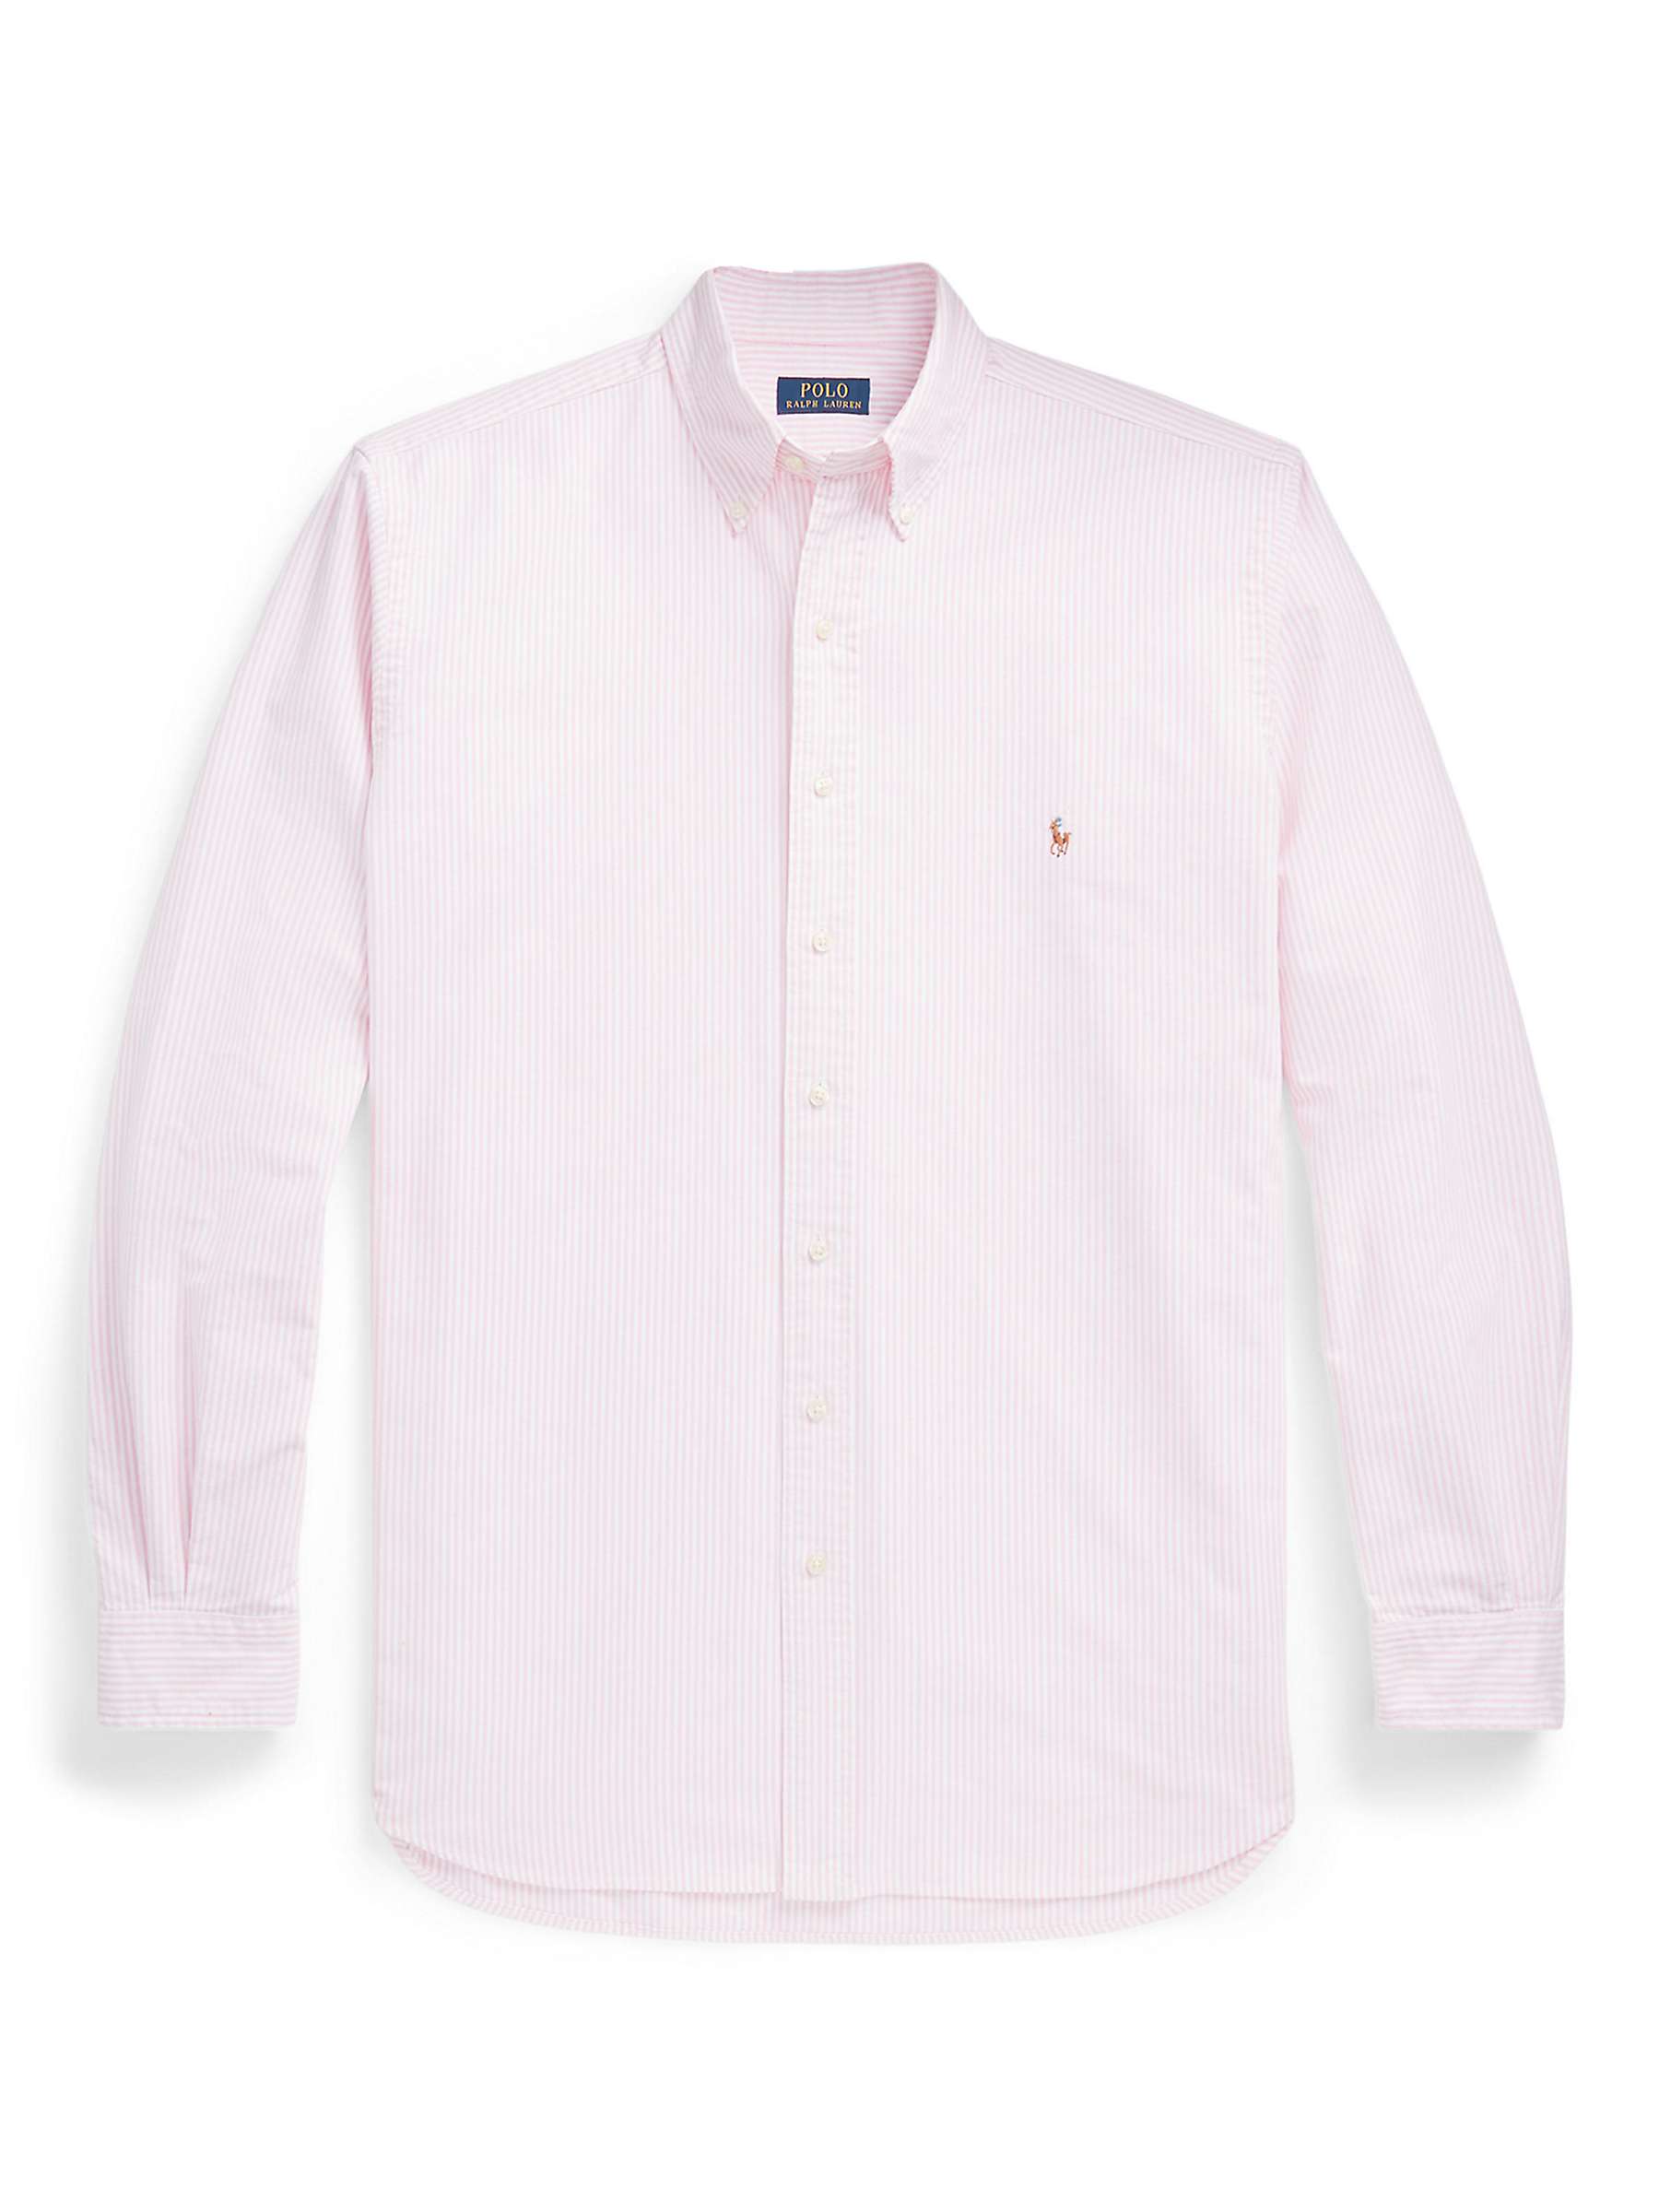 Buy Polo Ralph Lauren Big & Tall Gingham Oxford Shirt Online at johnlewis.com